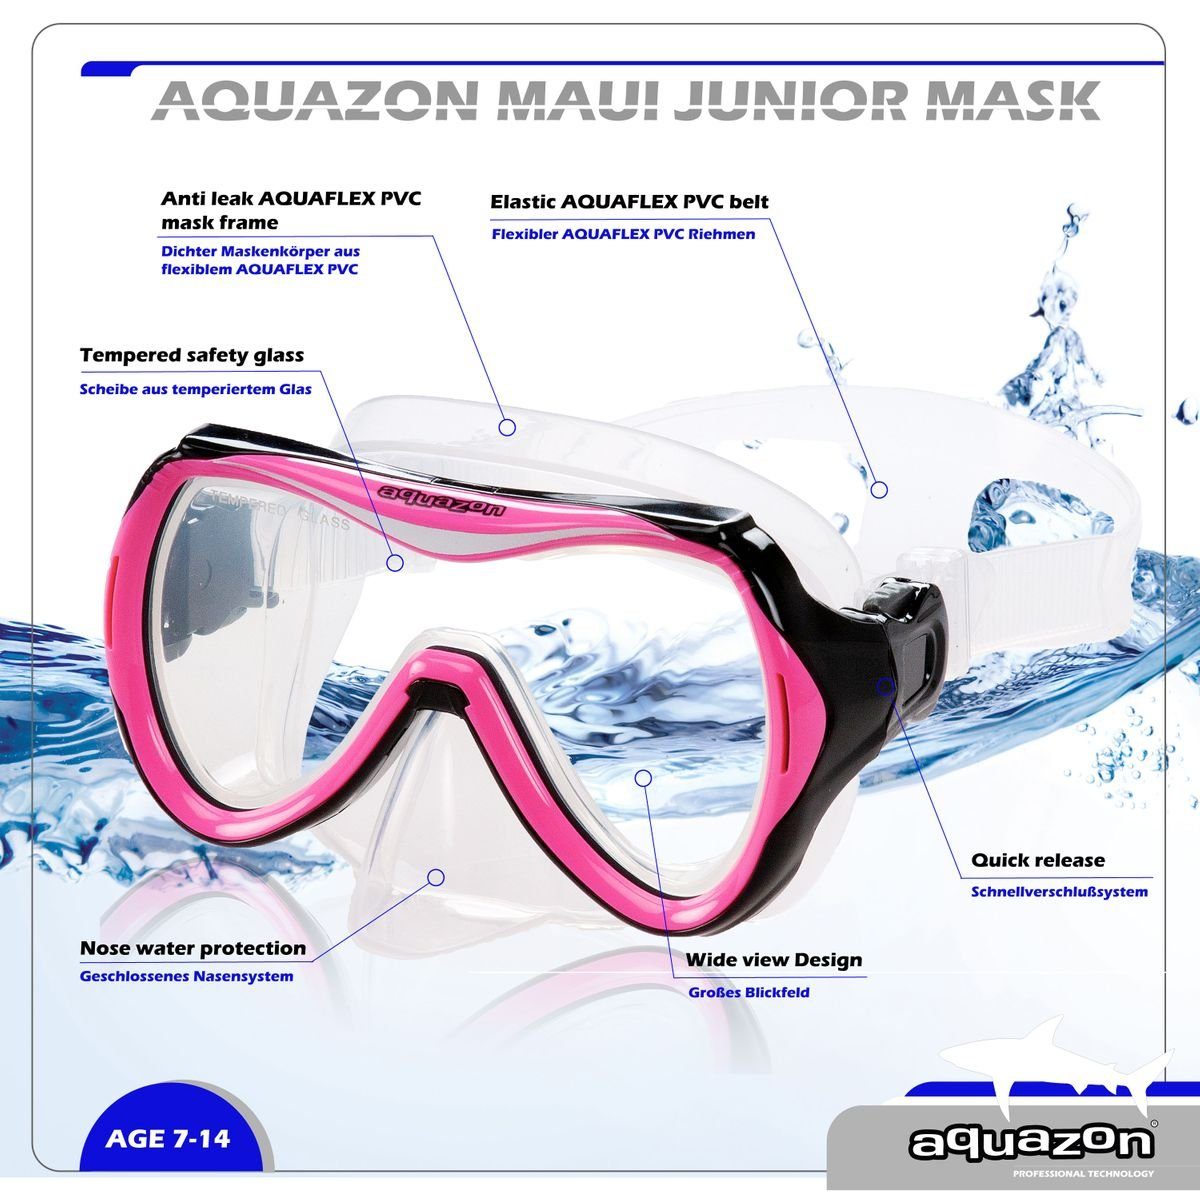 7-14 años Aquazon Beach junior schnorchelbrille Pink mascarilla 